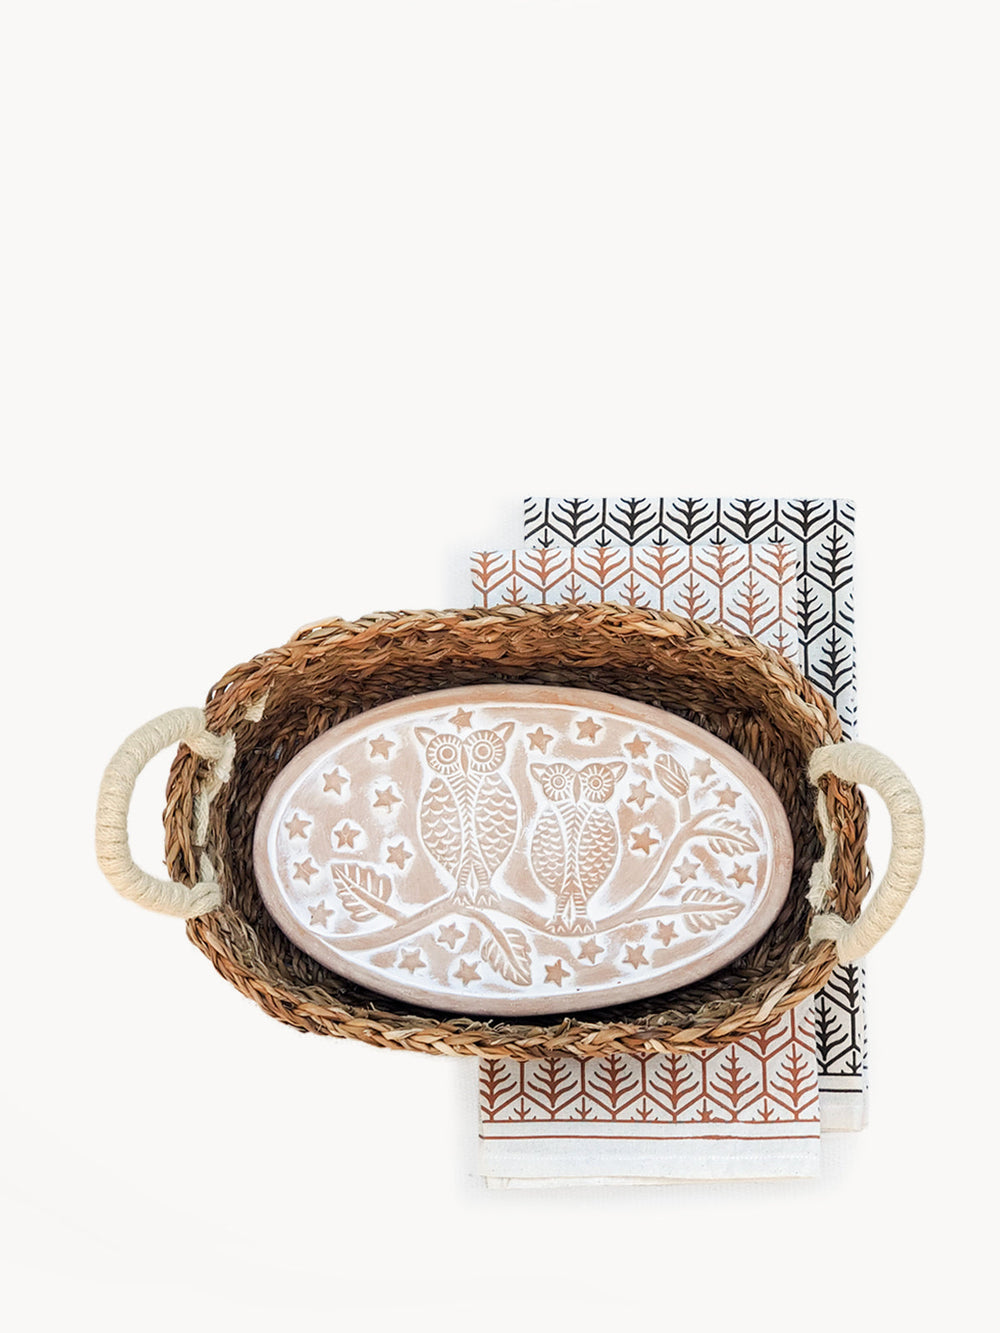 Bread Warmer & Basket Gift Set with Tea Towel - Owl Oval by KORISSA